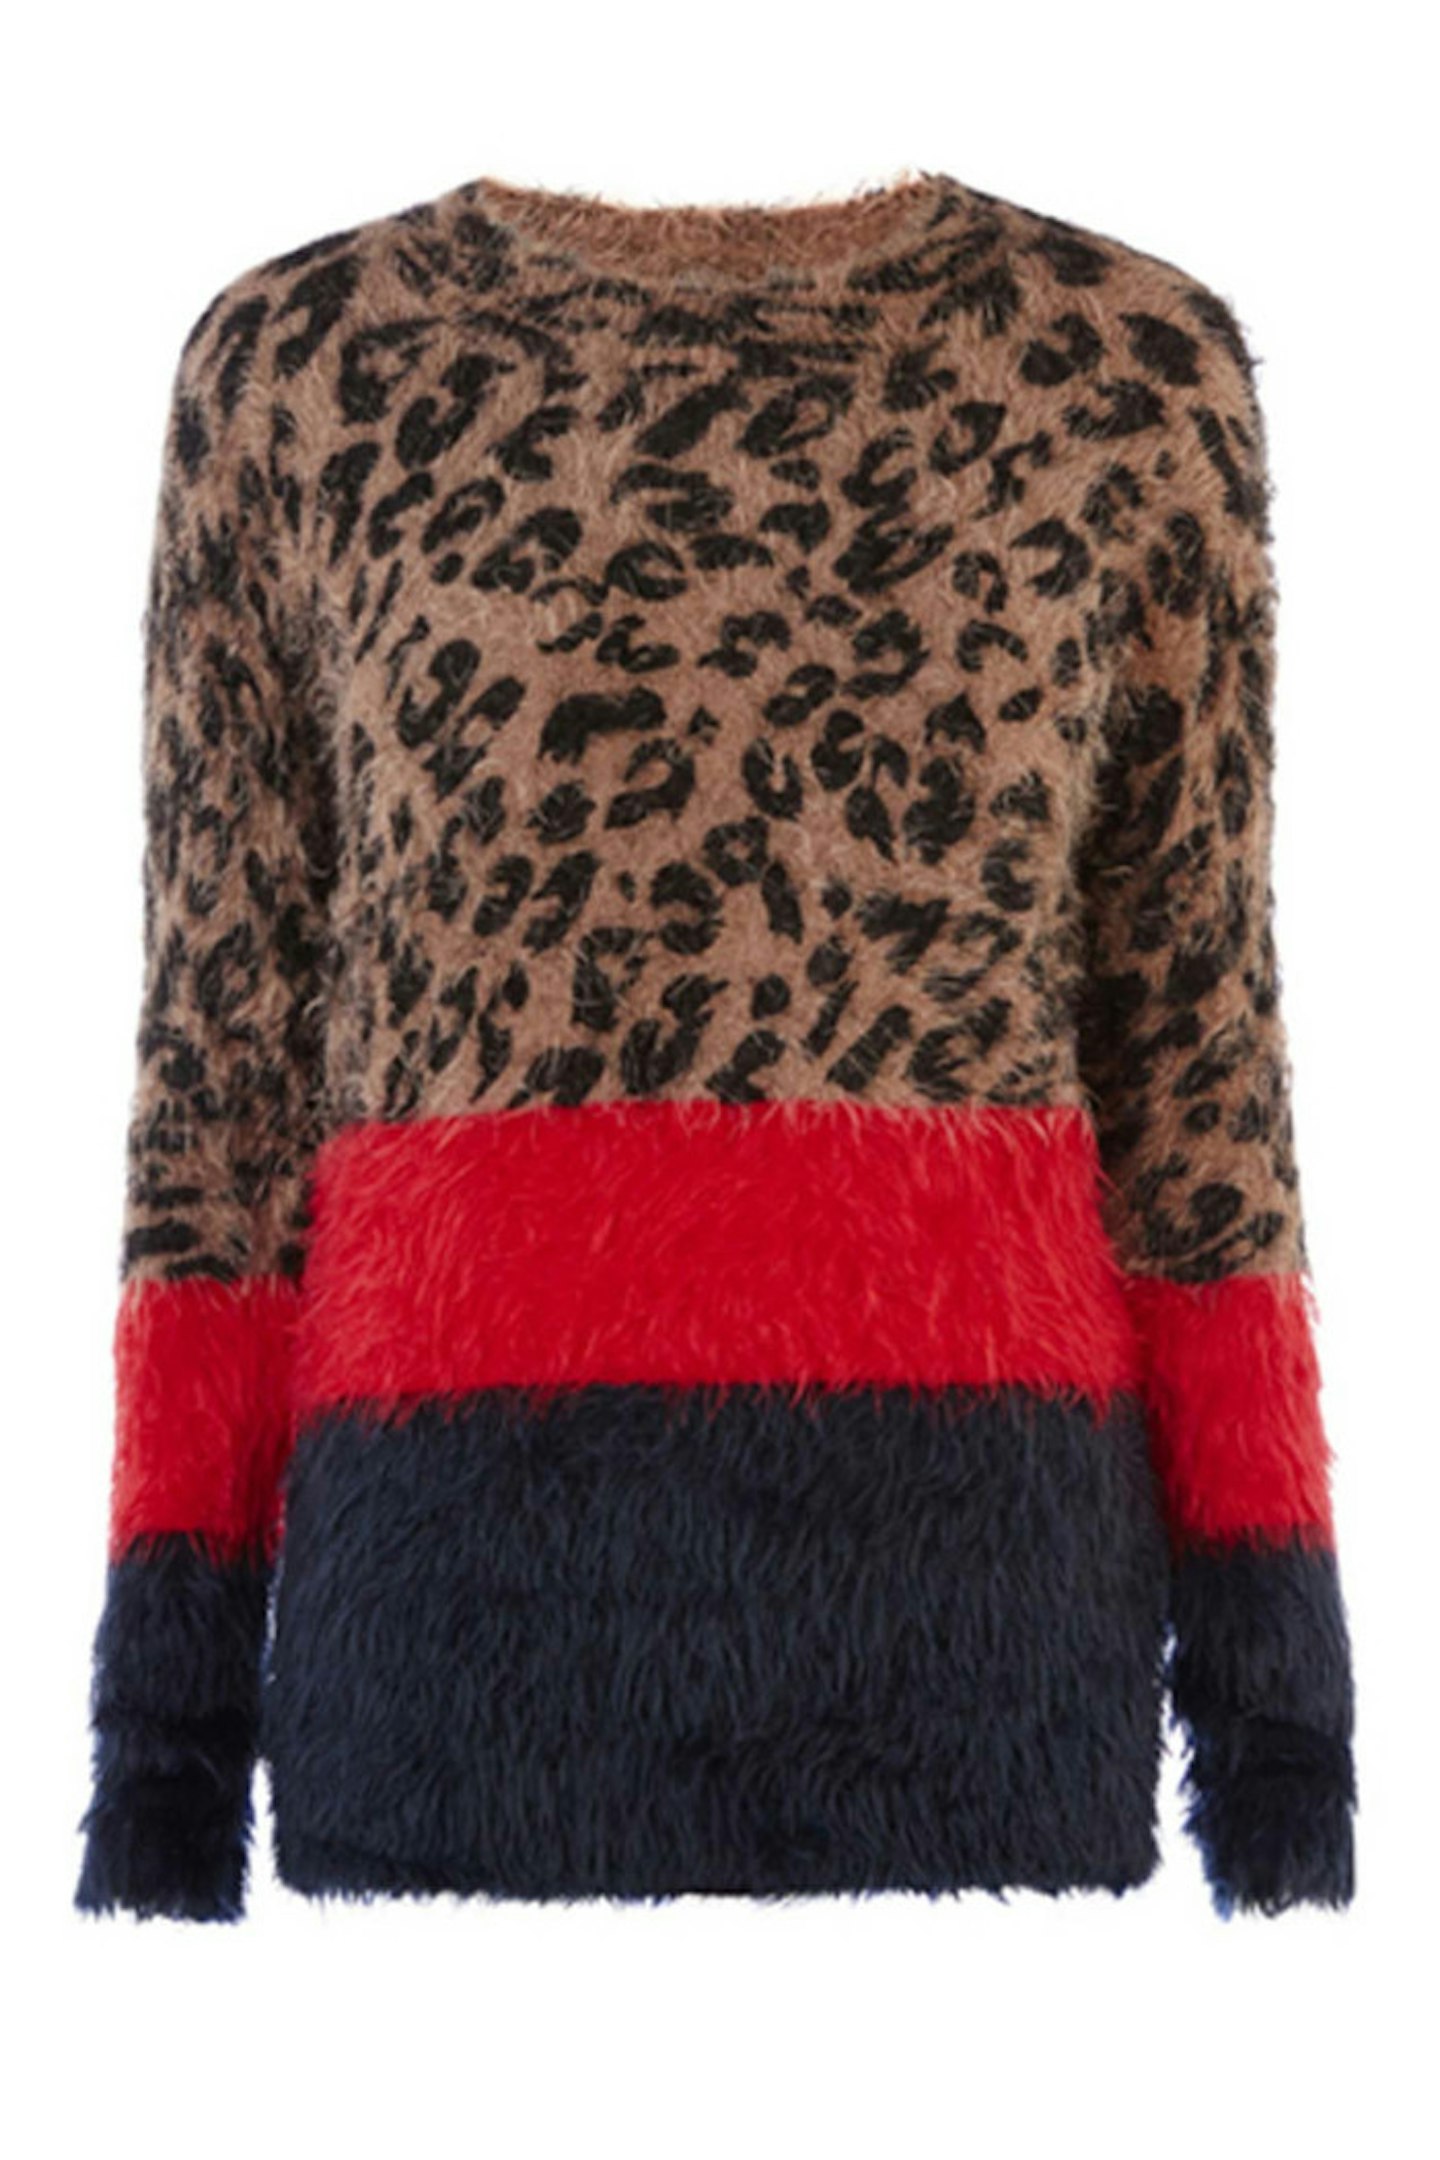 26. Leopard print/red/navy fluffy jumper, £45, Warehouse